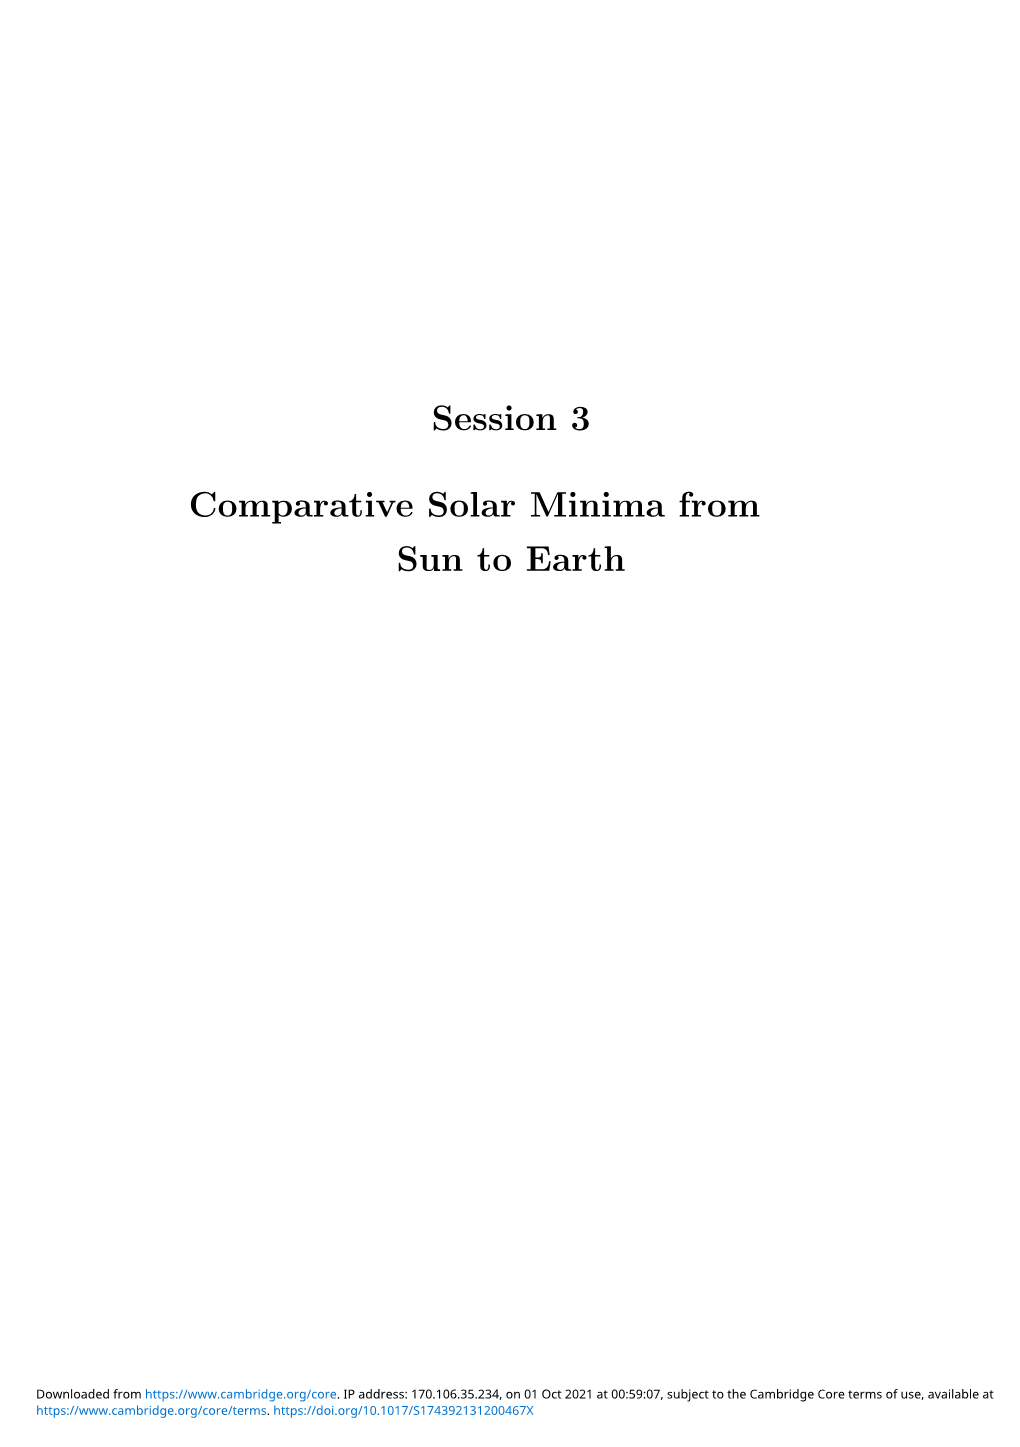 Session 3 Comparative Solar Minima from Sun to Earth